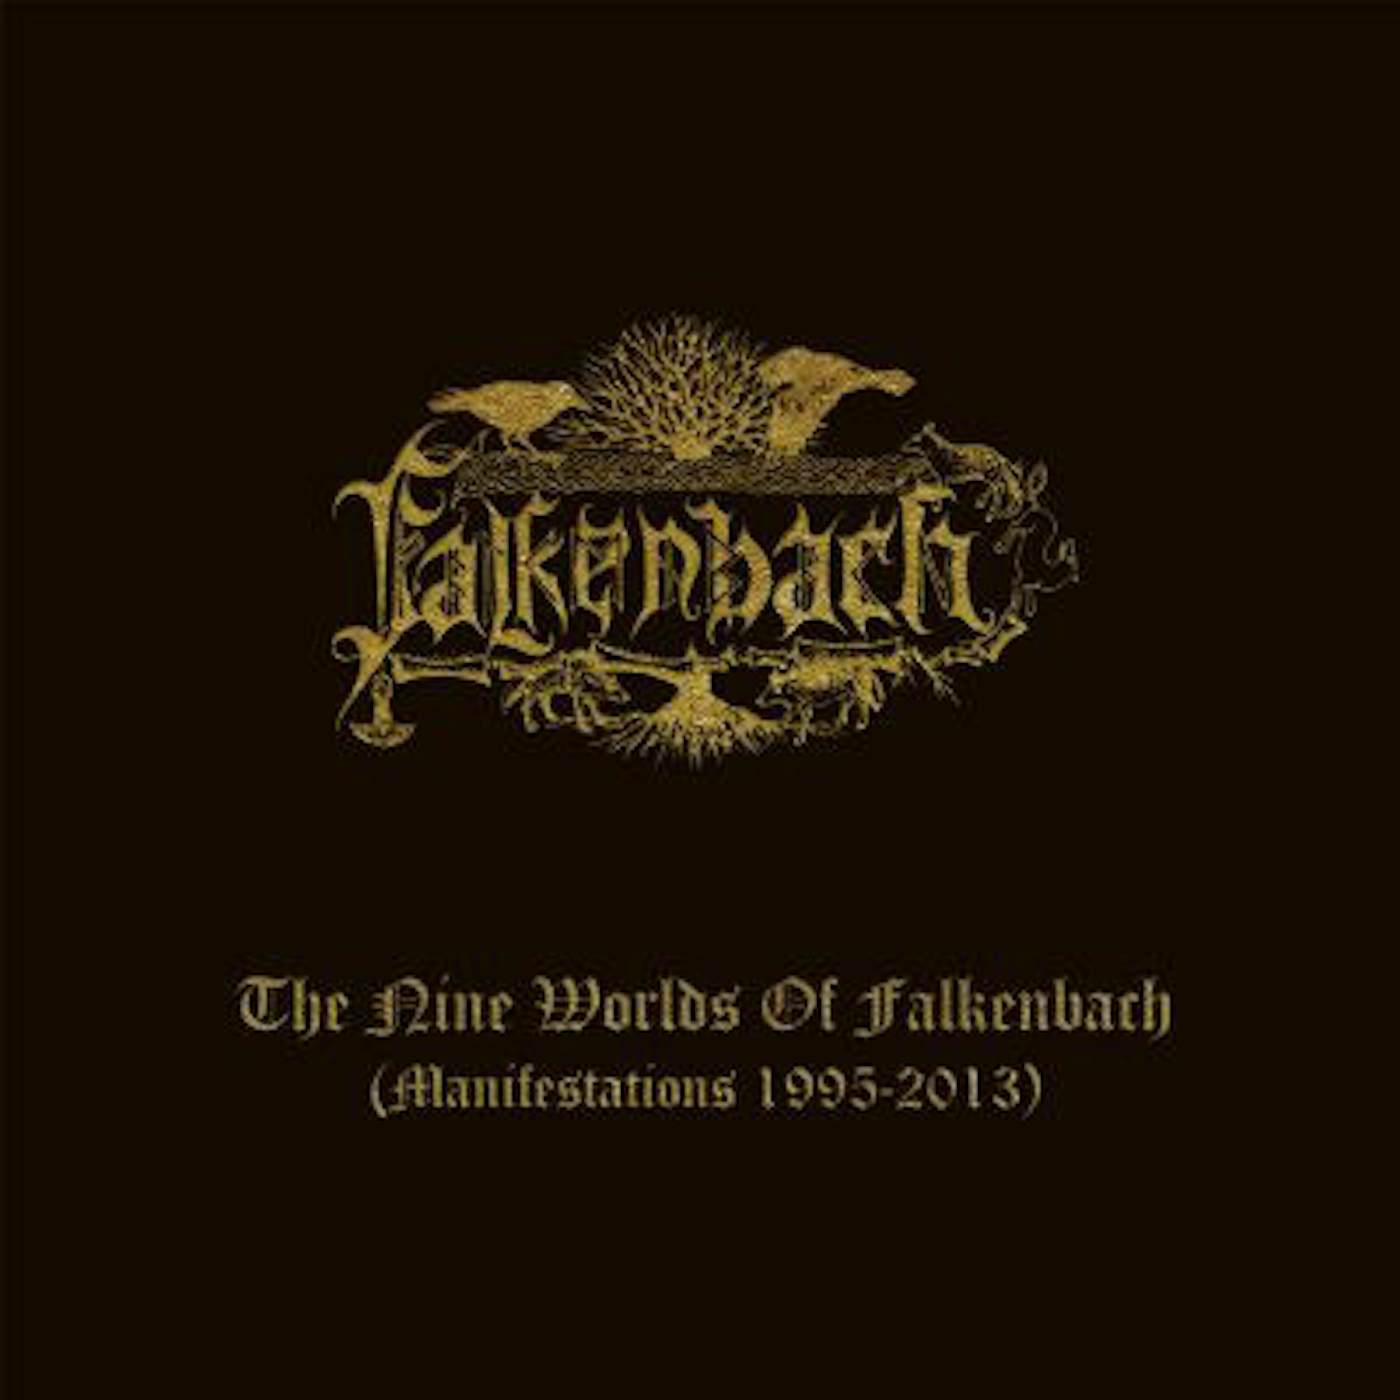 NINE WORLDS OF FALKENBACH (MANIFESTATIONS 1995-13) Vinyl Record